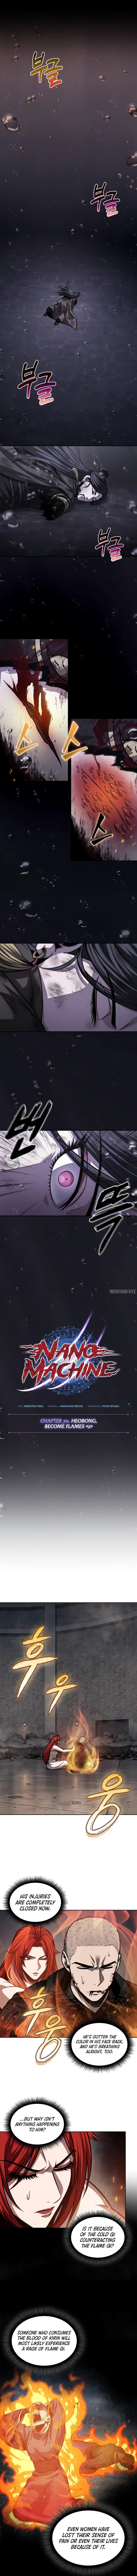 Nano Machine - Chapter 206 Page 2